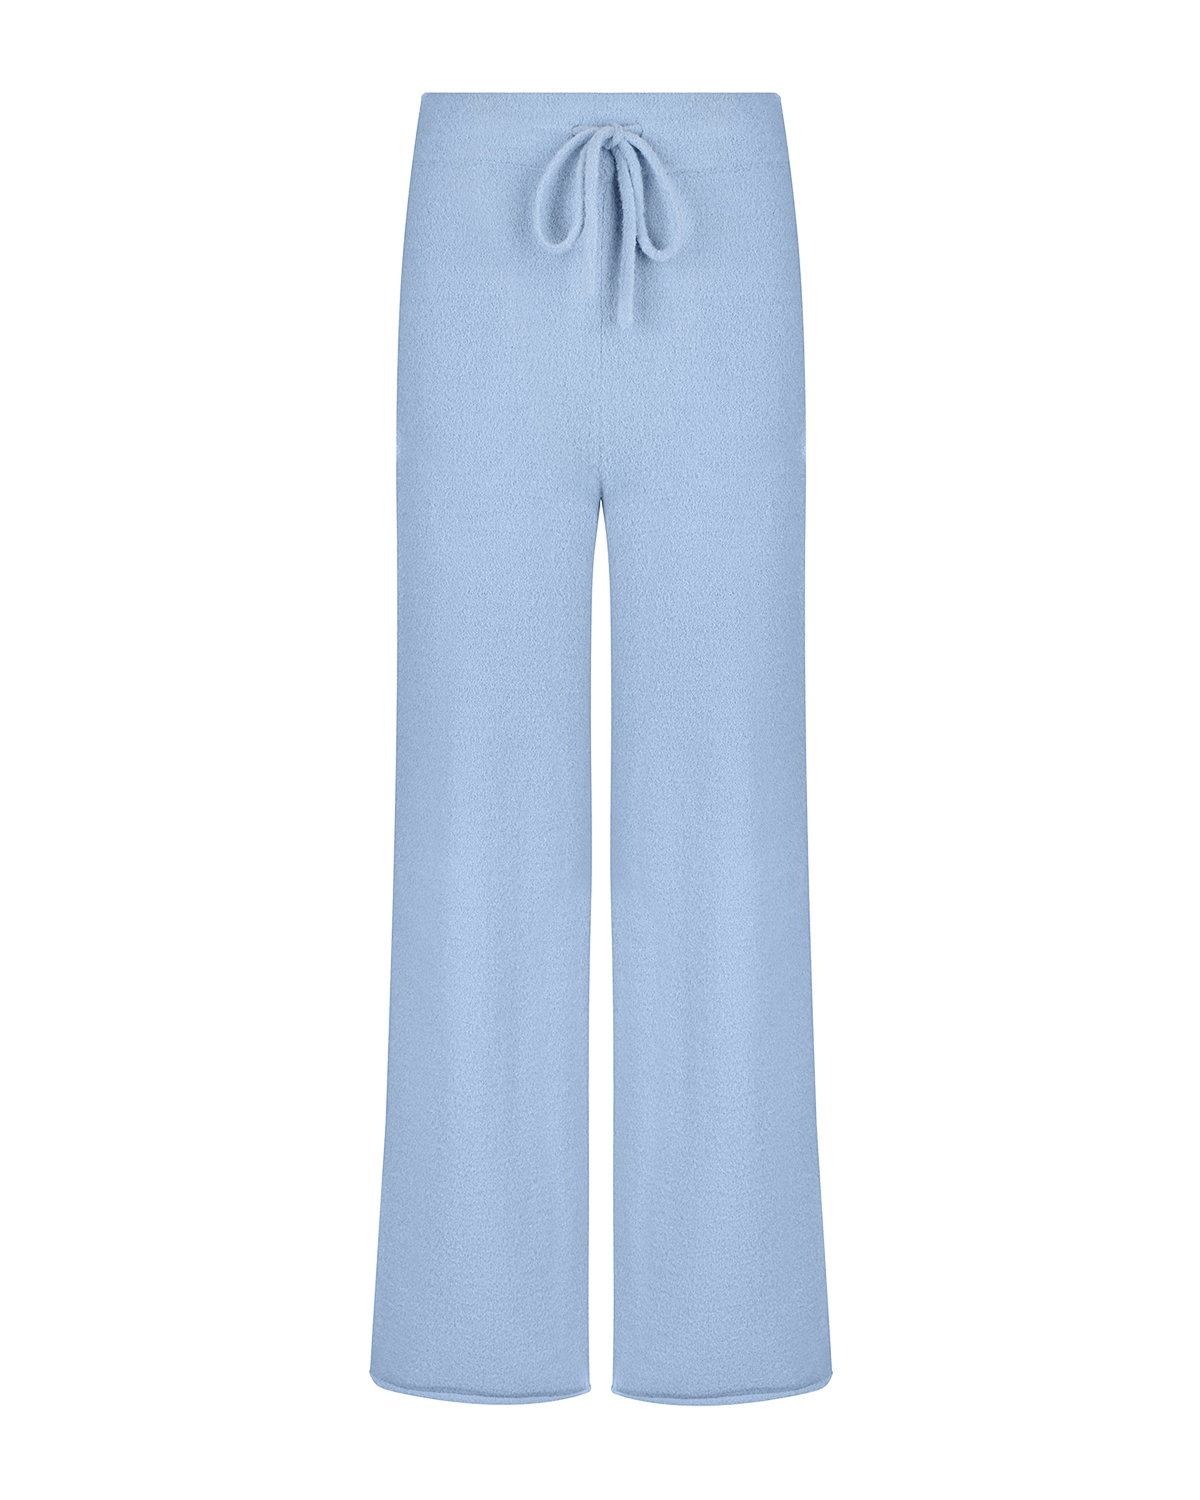 Комплект: топ и брюки, голубой Deha, размер 40 - фото 4